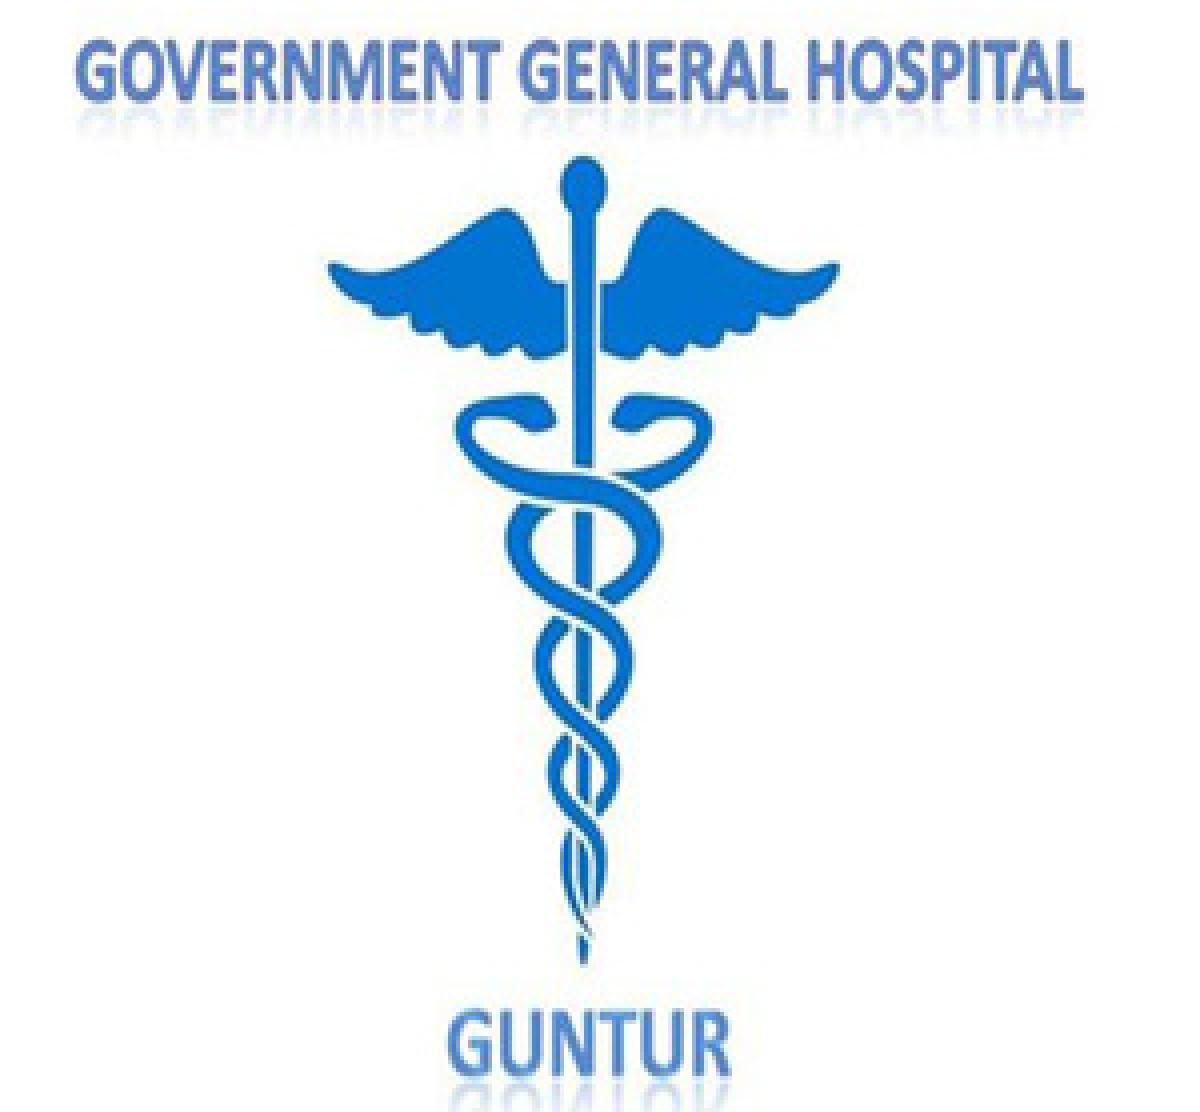 Govt hospital in shambles